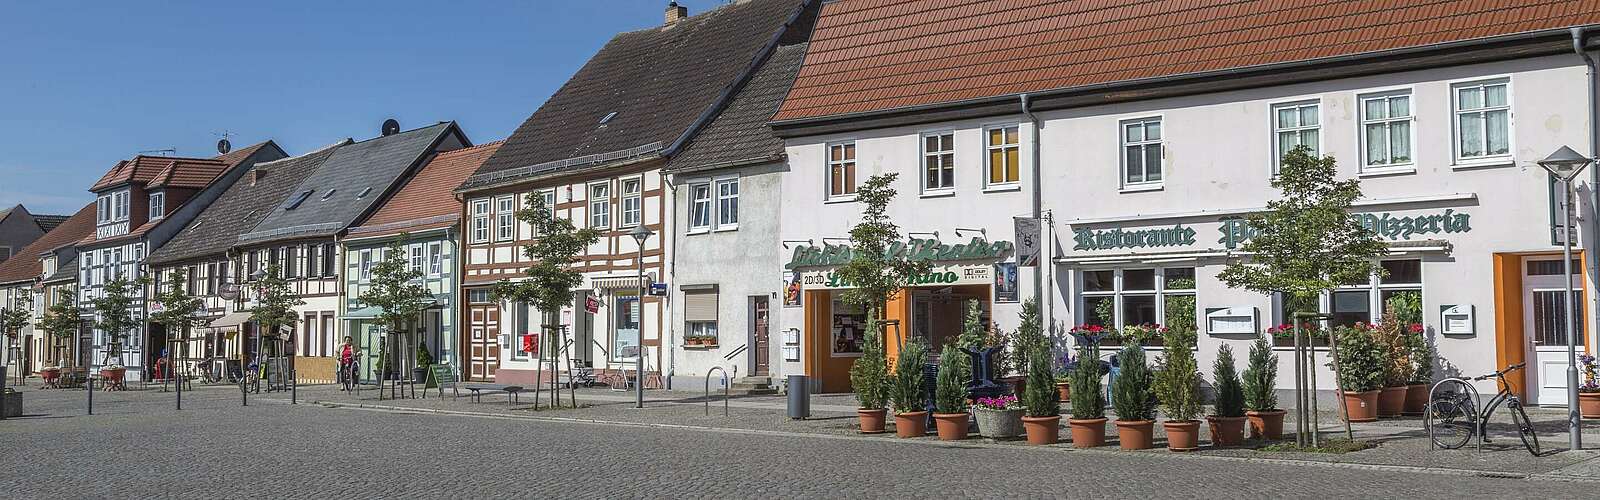 Historische Altstadt in Wusterhausen-Dosse,
        
    

        Foto: TMB-Fotoarchiv/Steffen Lehmann